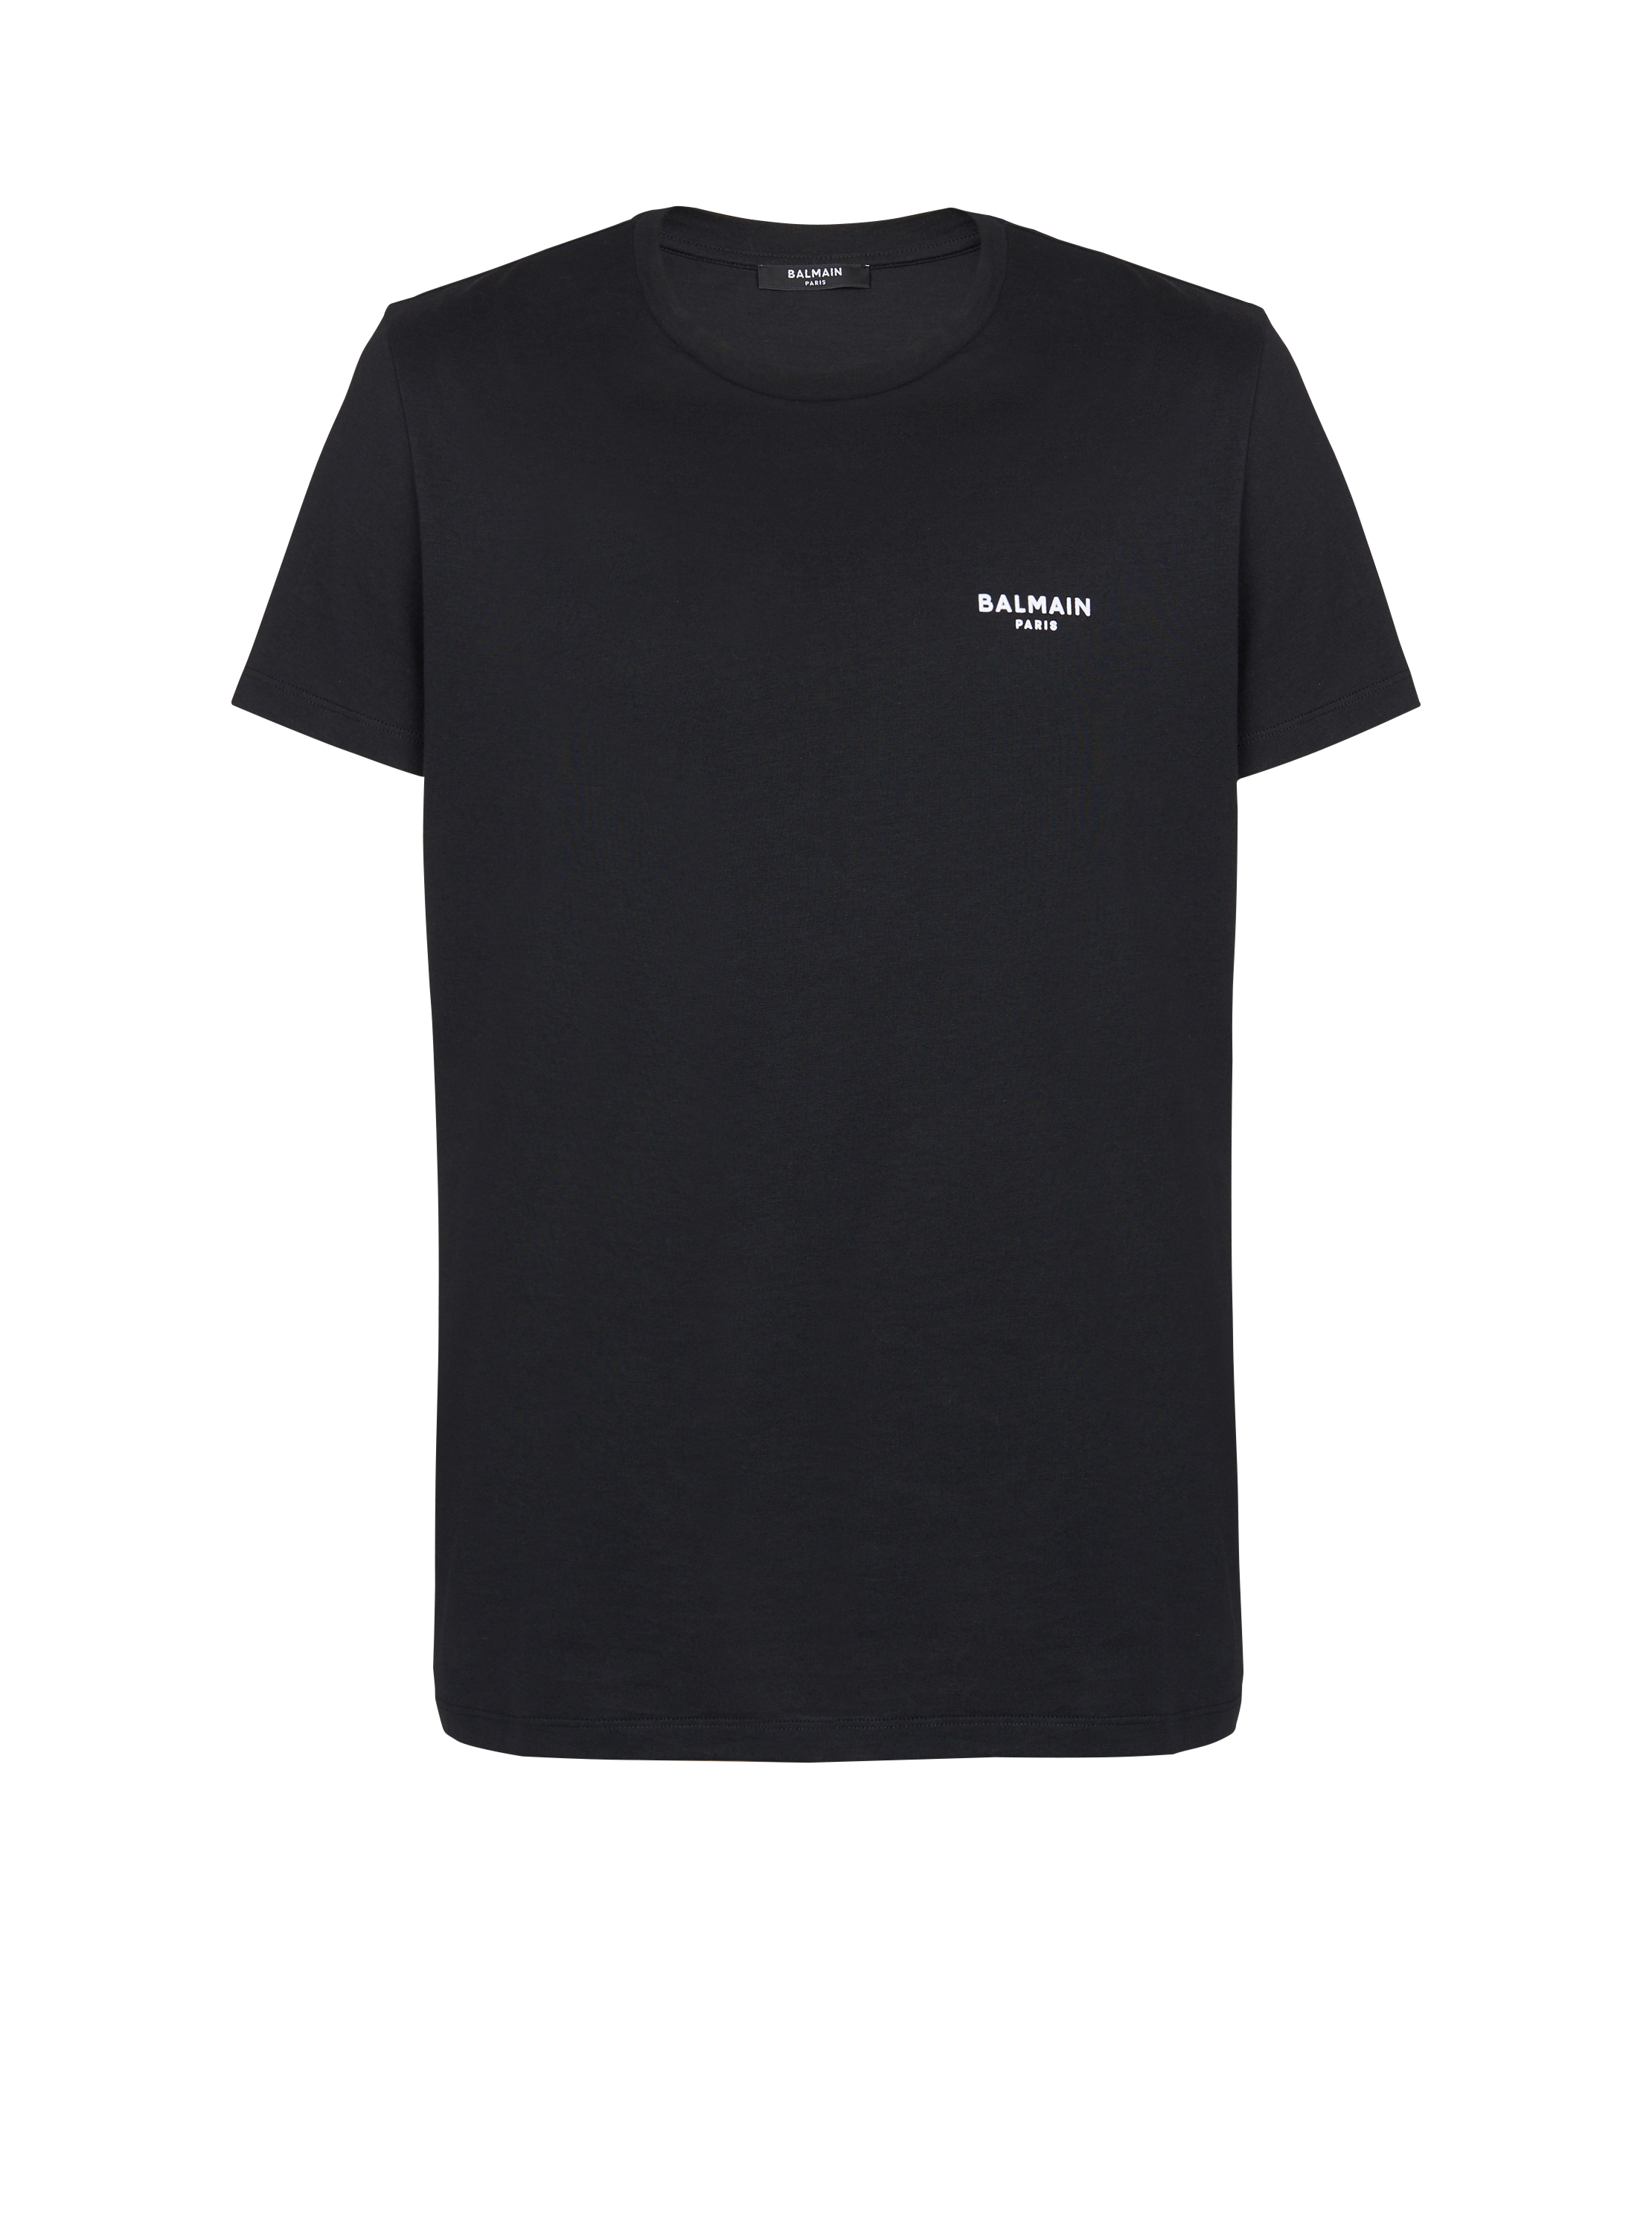 Flocked Balmain T-shirt, black, hi-res